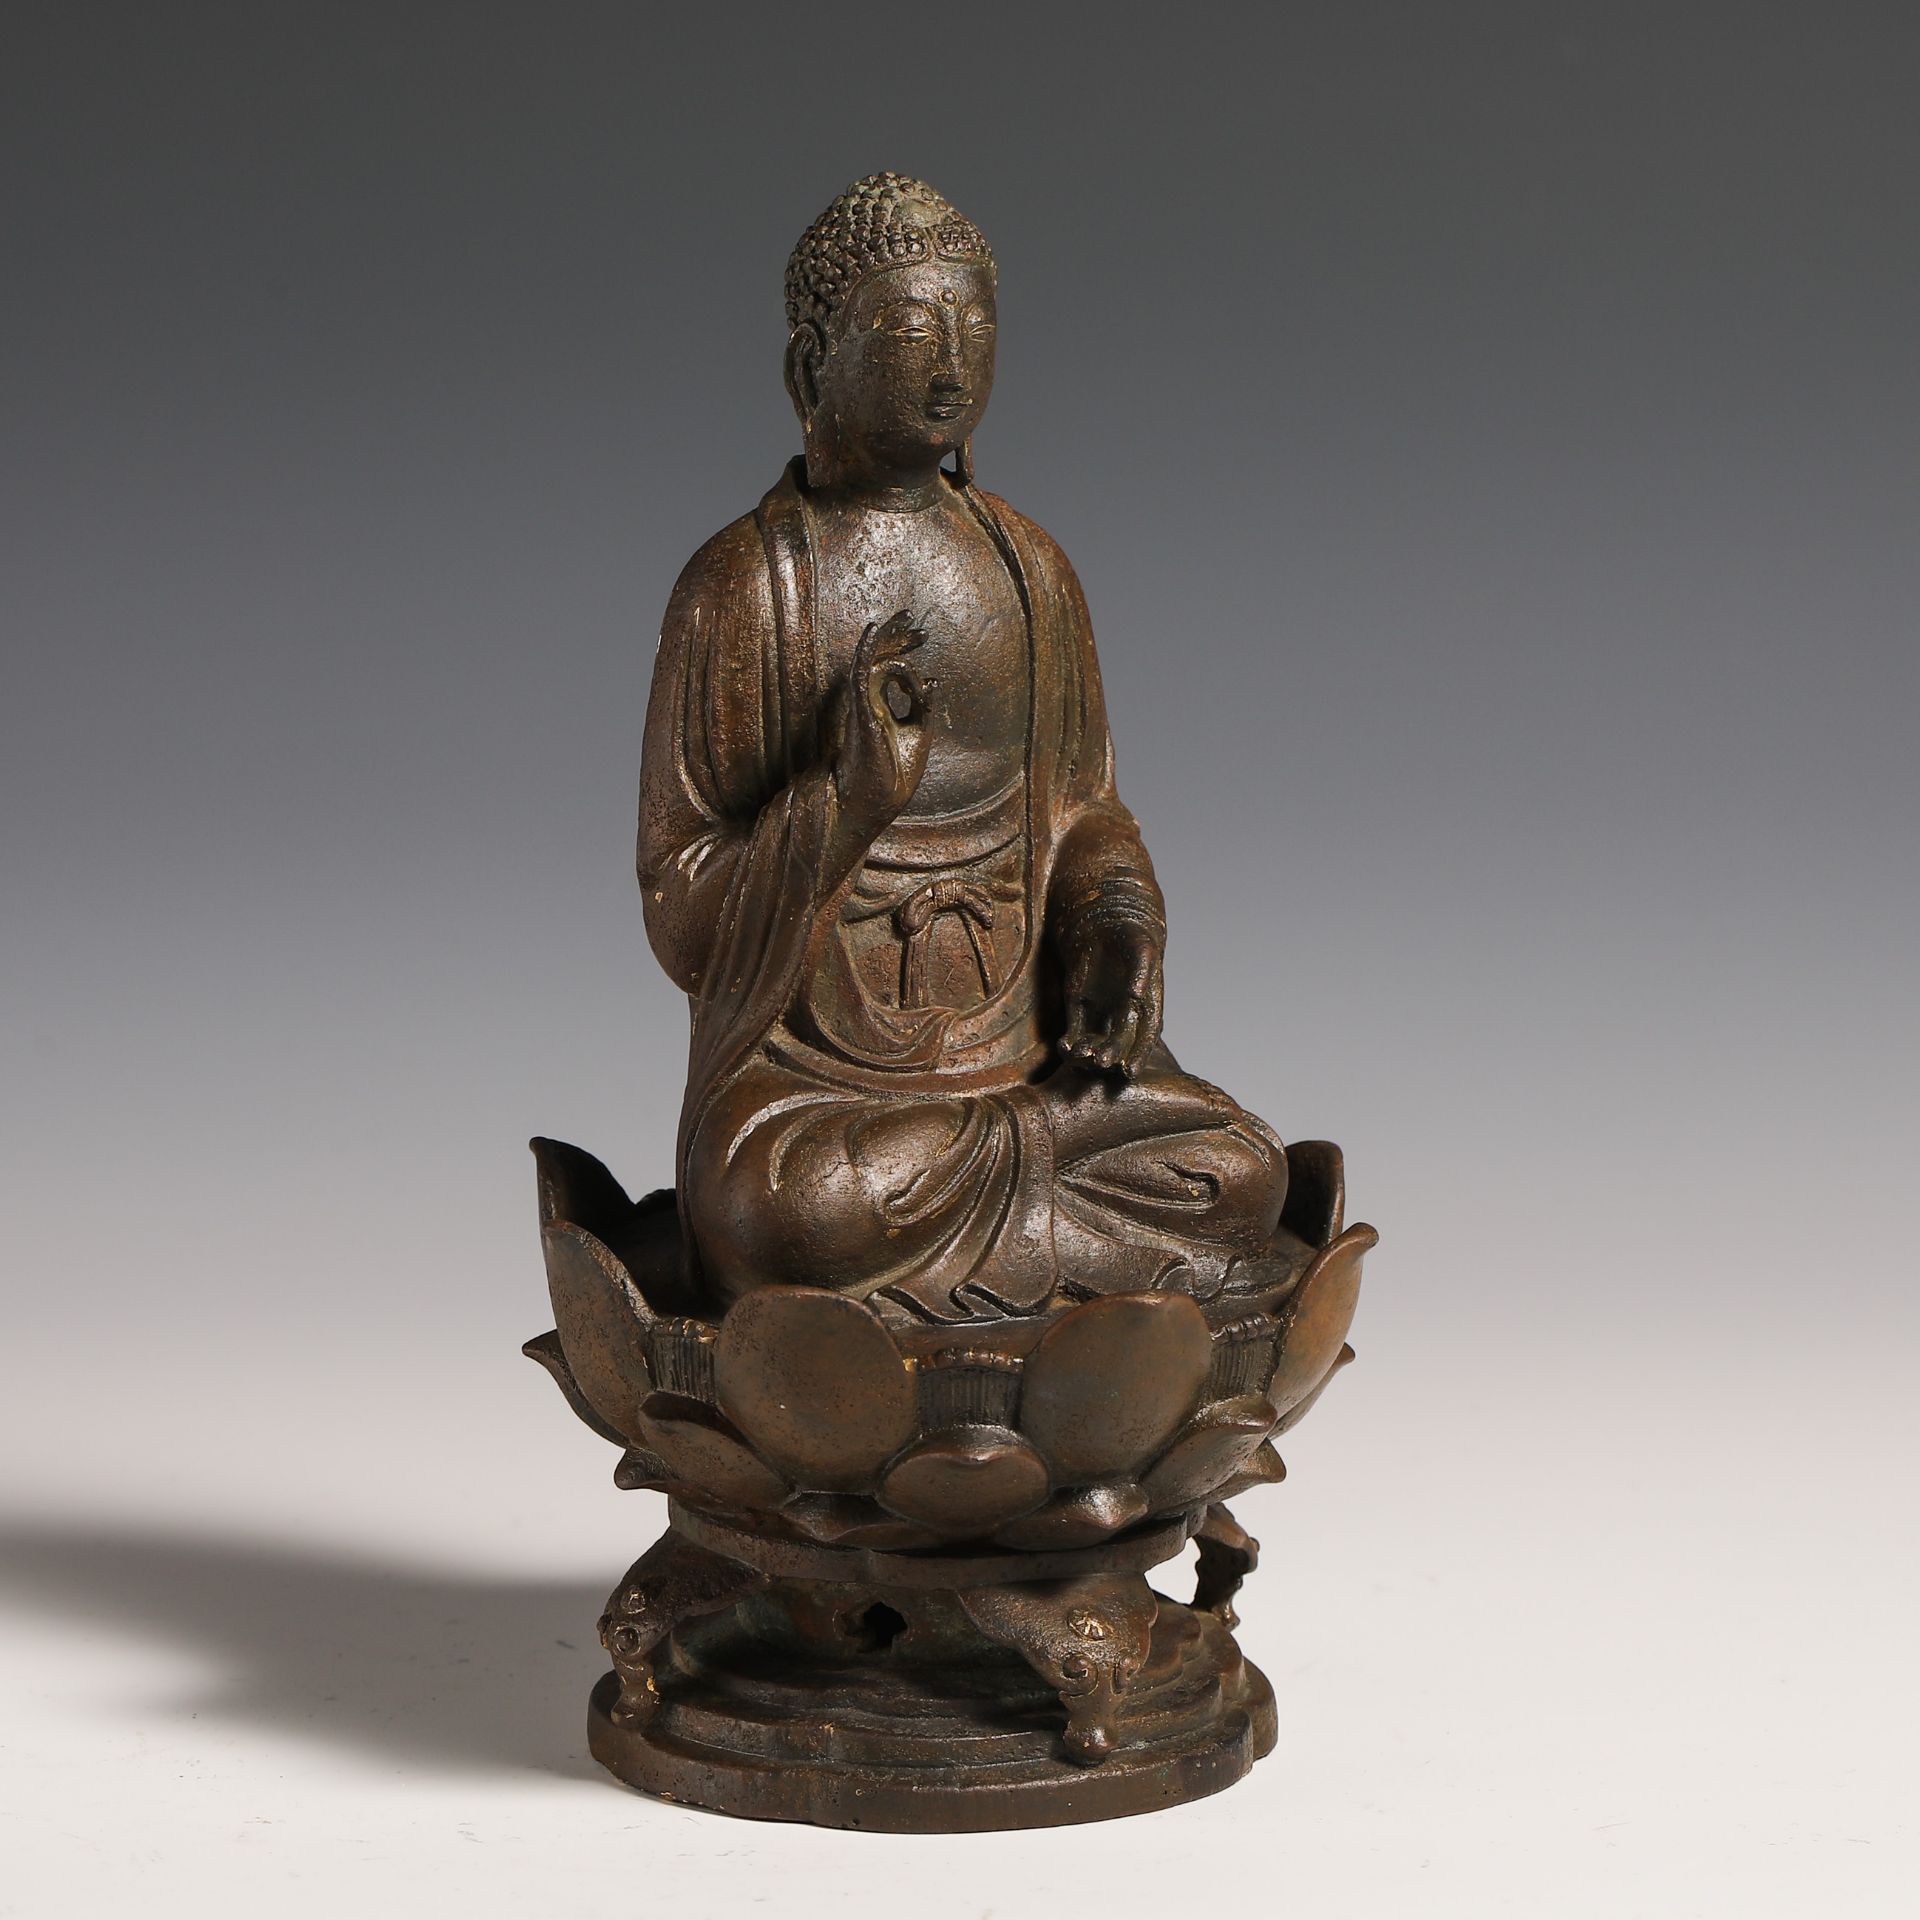 Liao Dynasty Buddha statue - Image 2 of 17